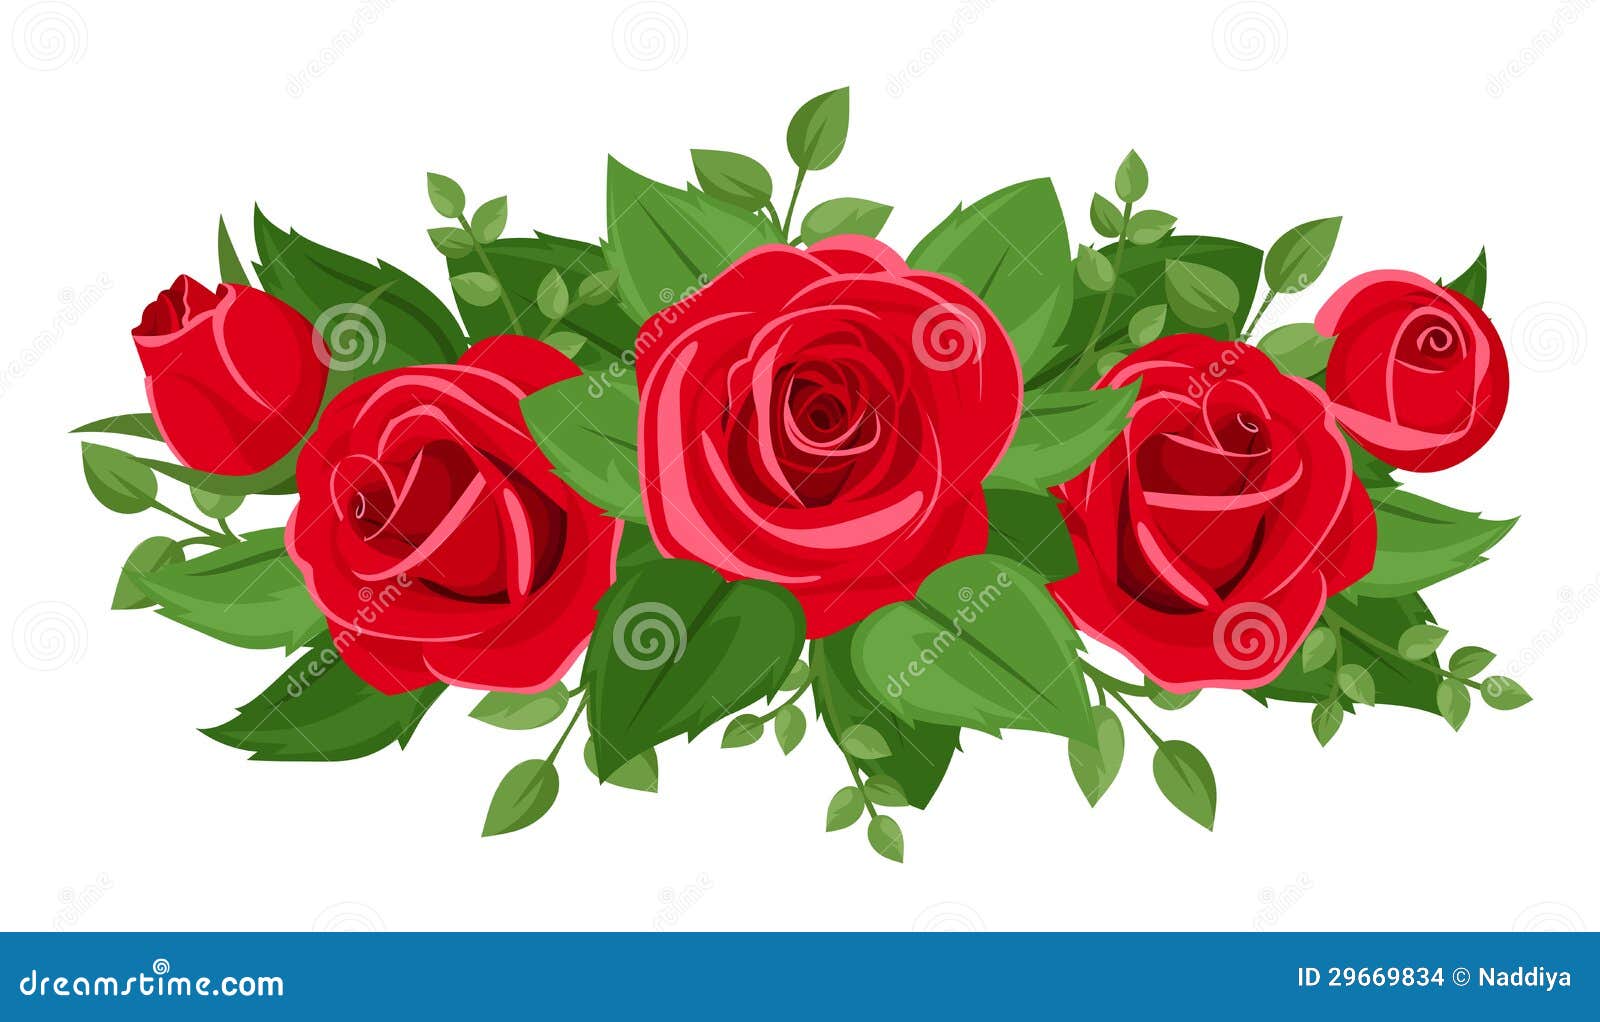 clipart rose rosse - photo #35